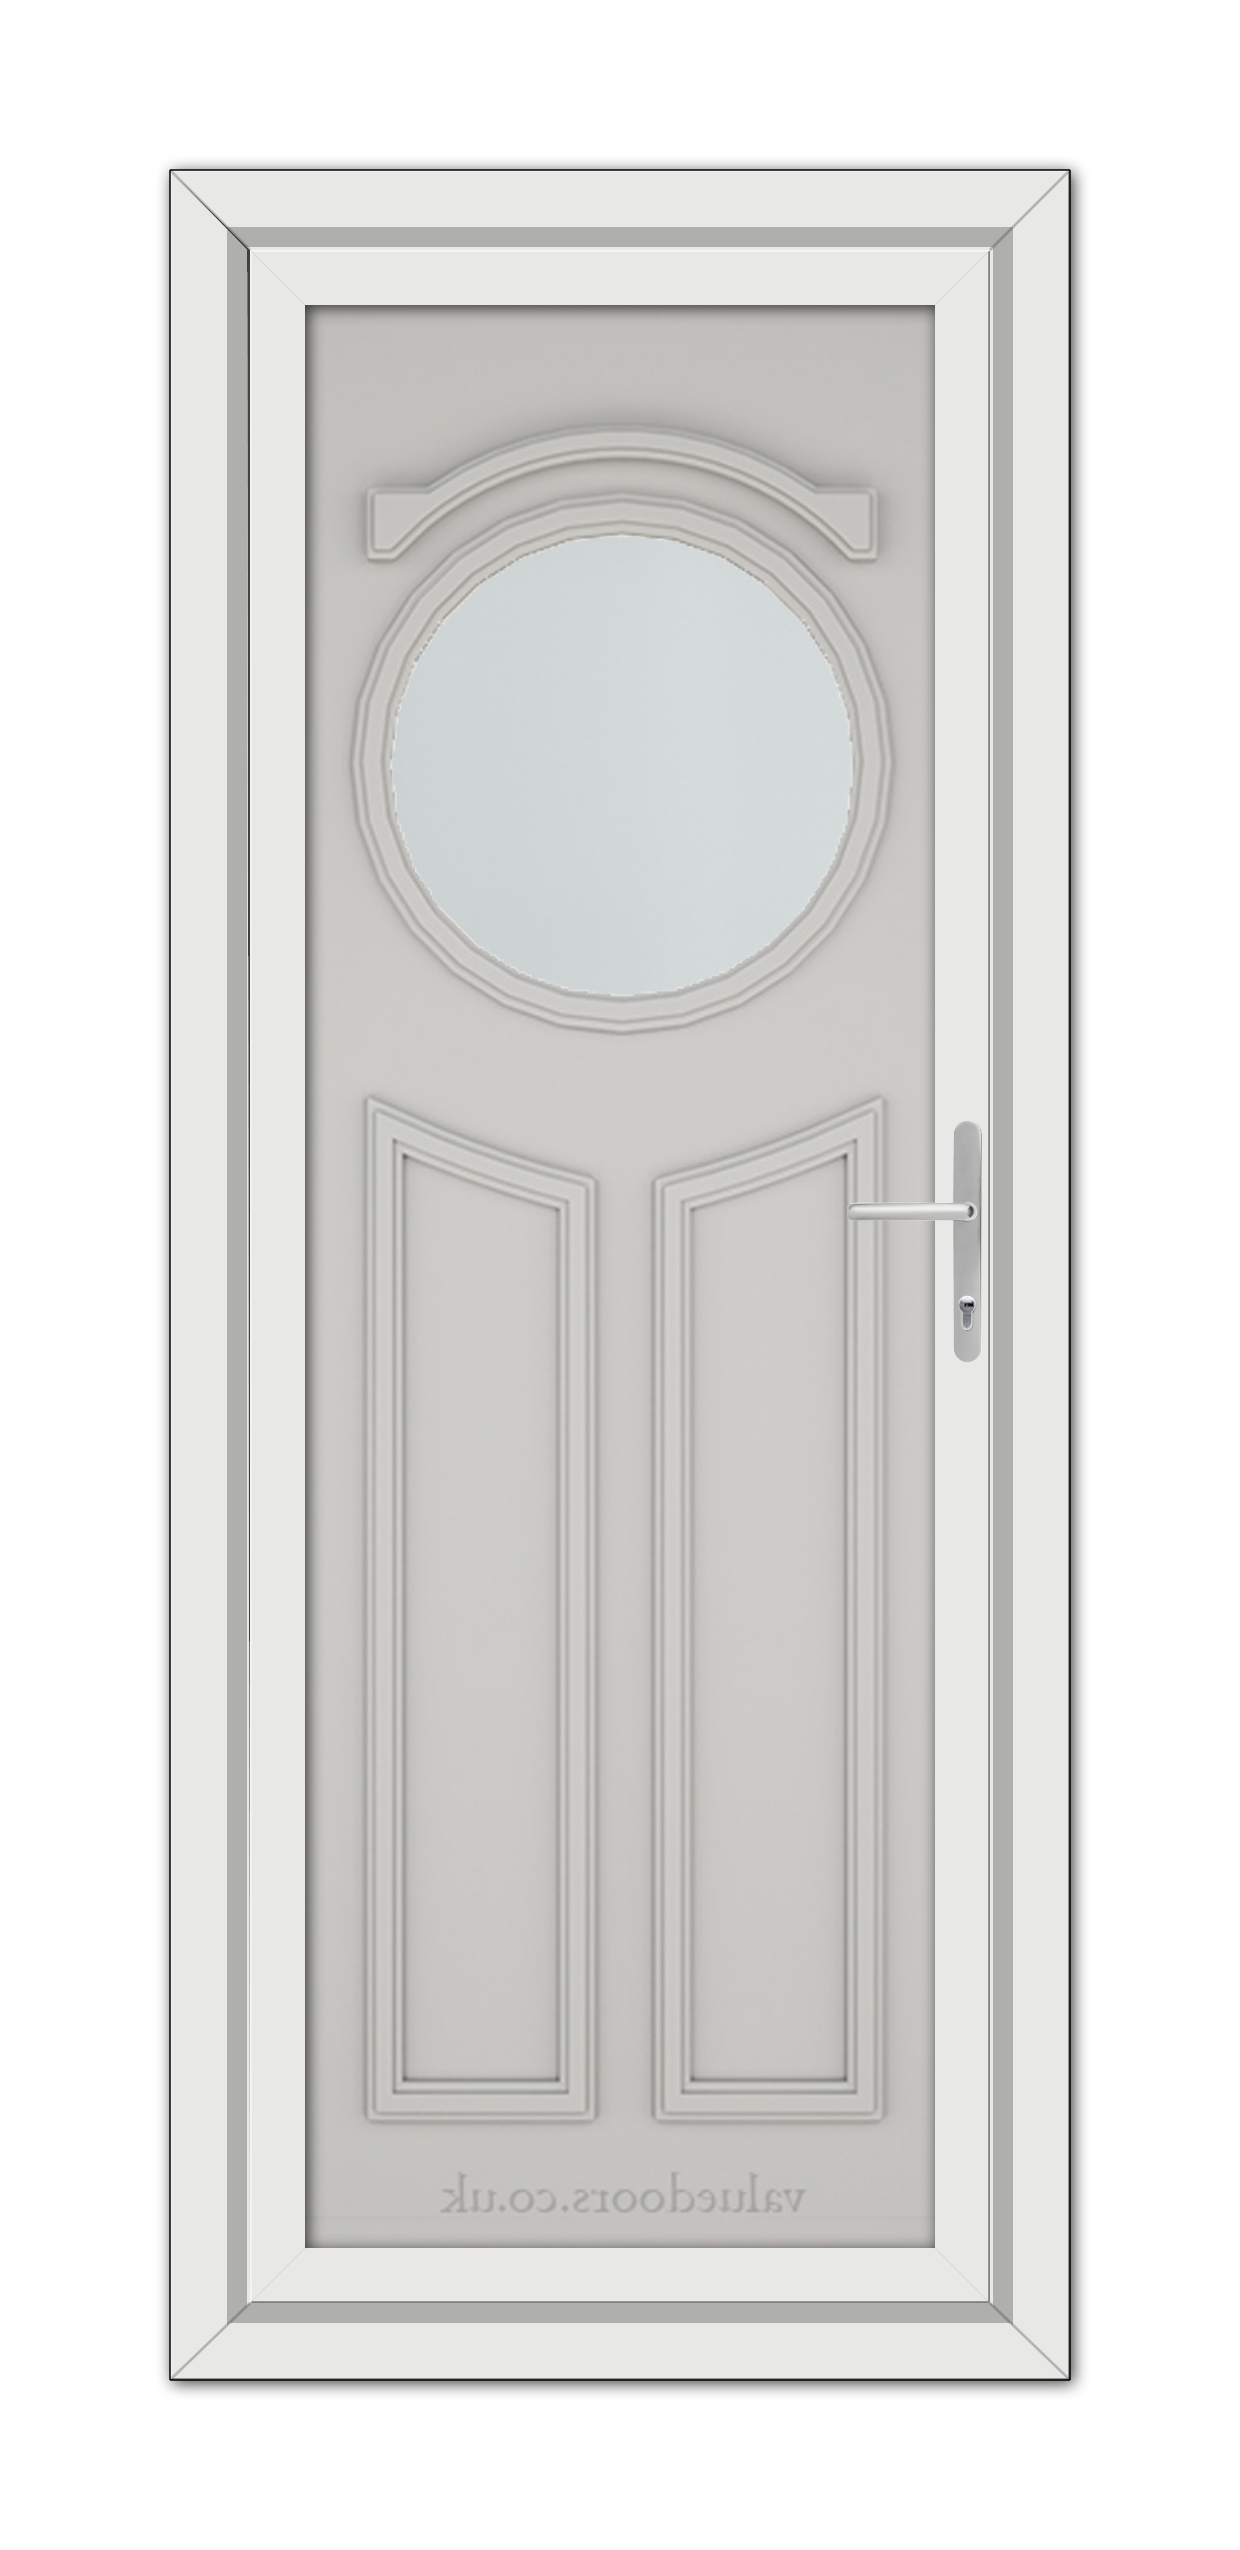 A Silver Grey Blenheim uPVC Door with a round window.